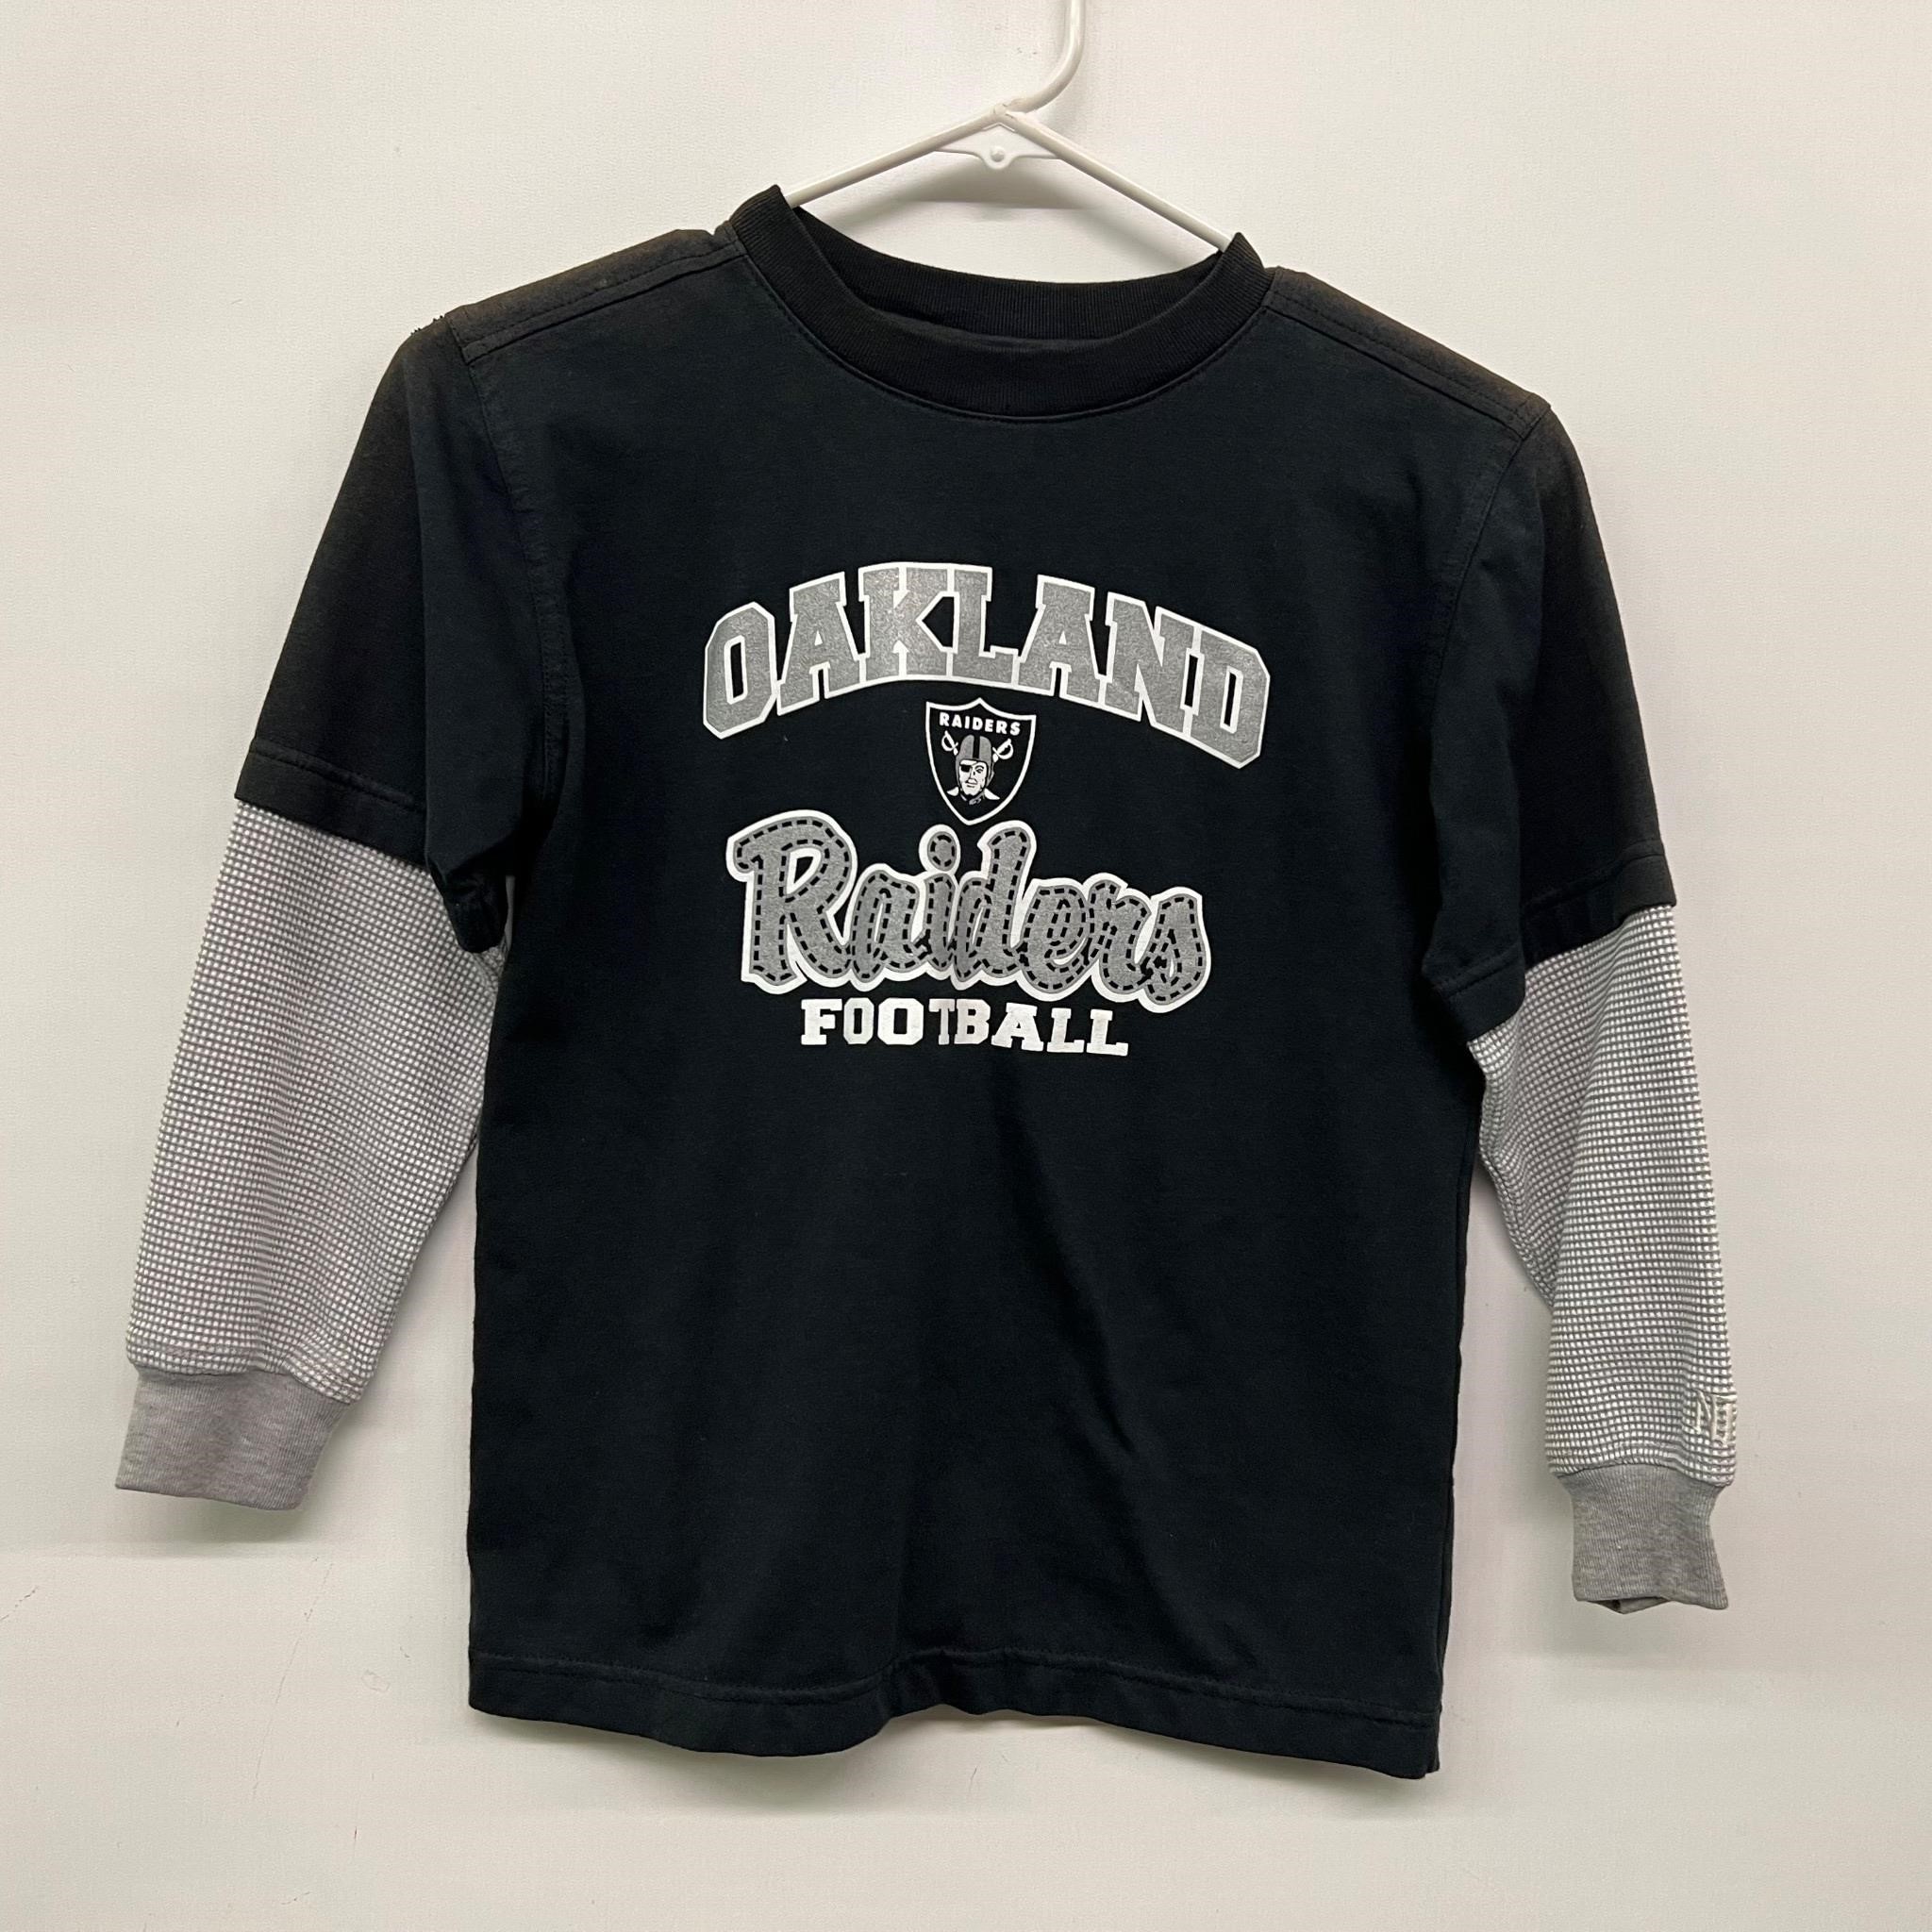 Oakland Raiders Shirt Size Medium (8-10)